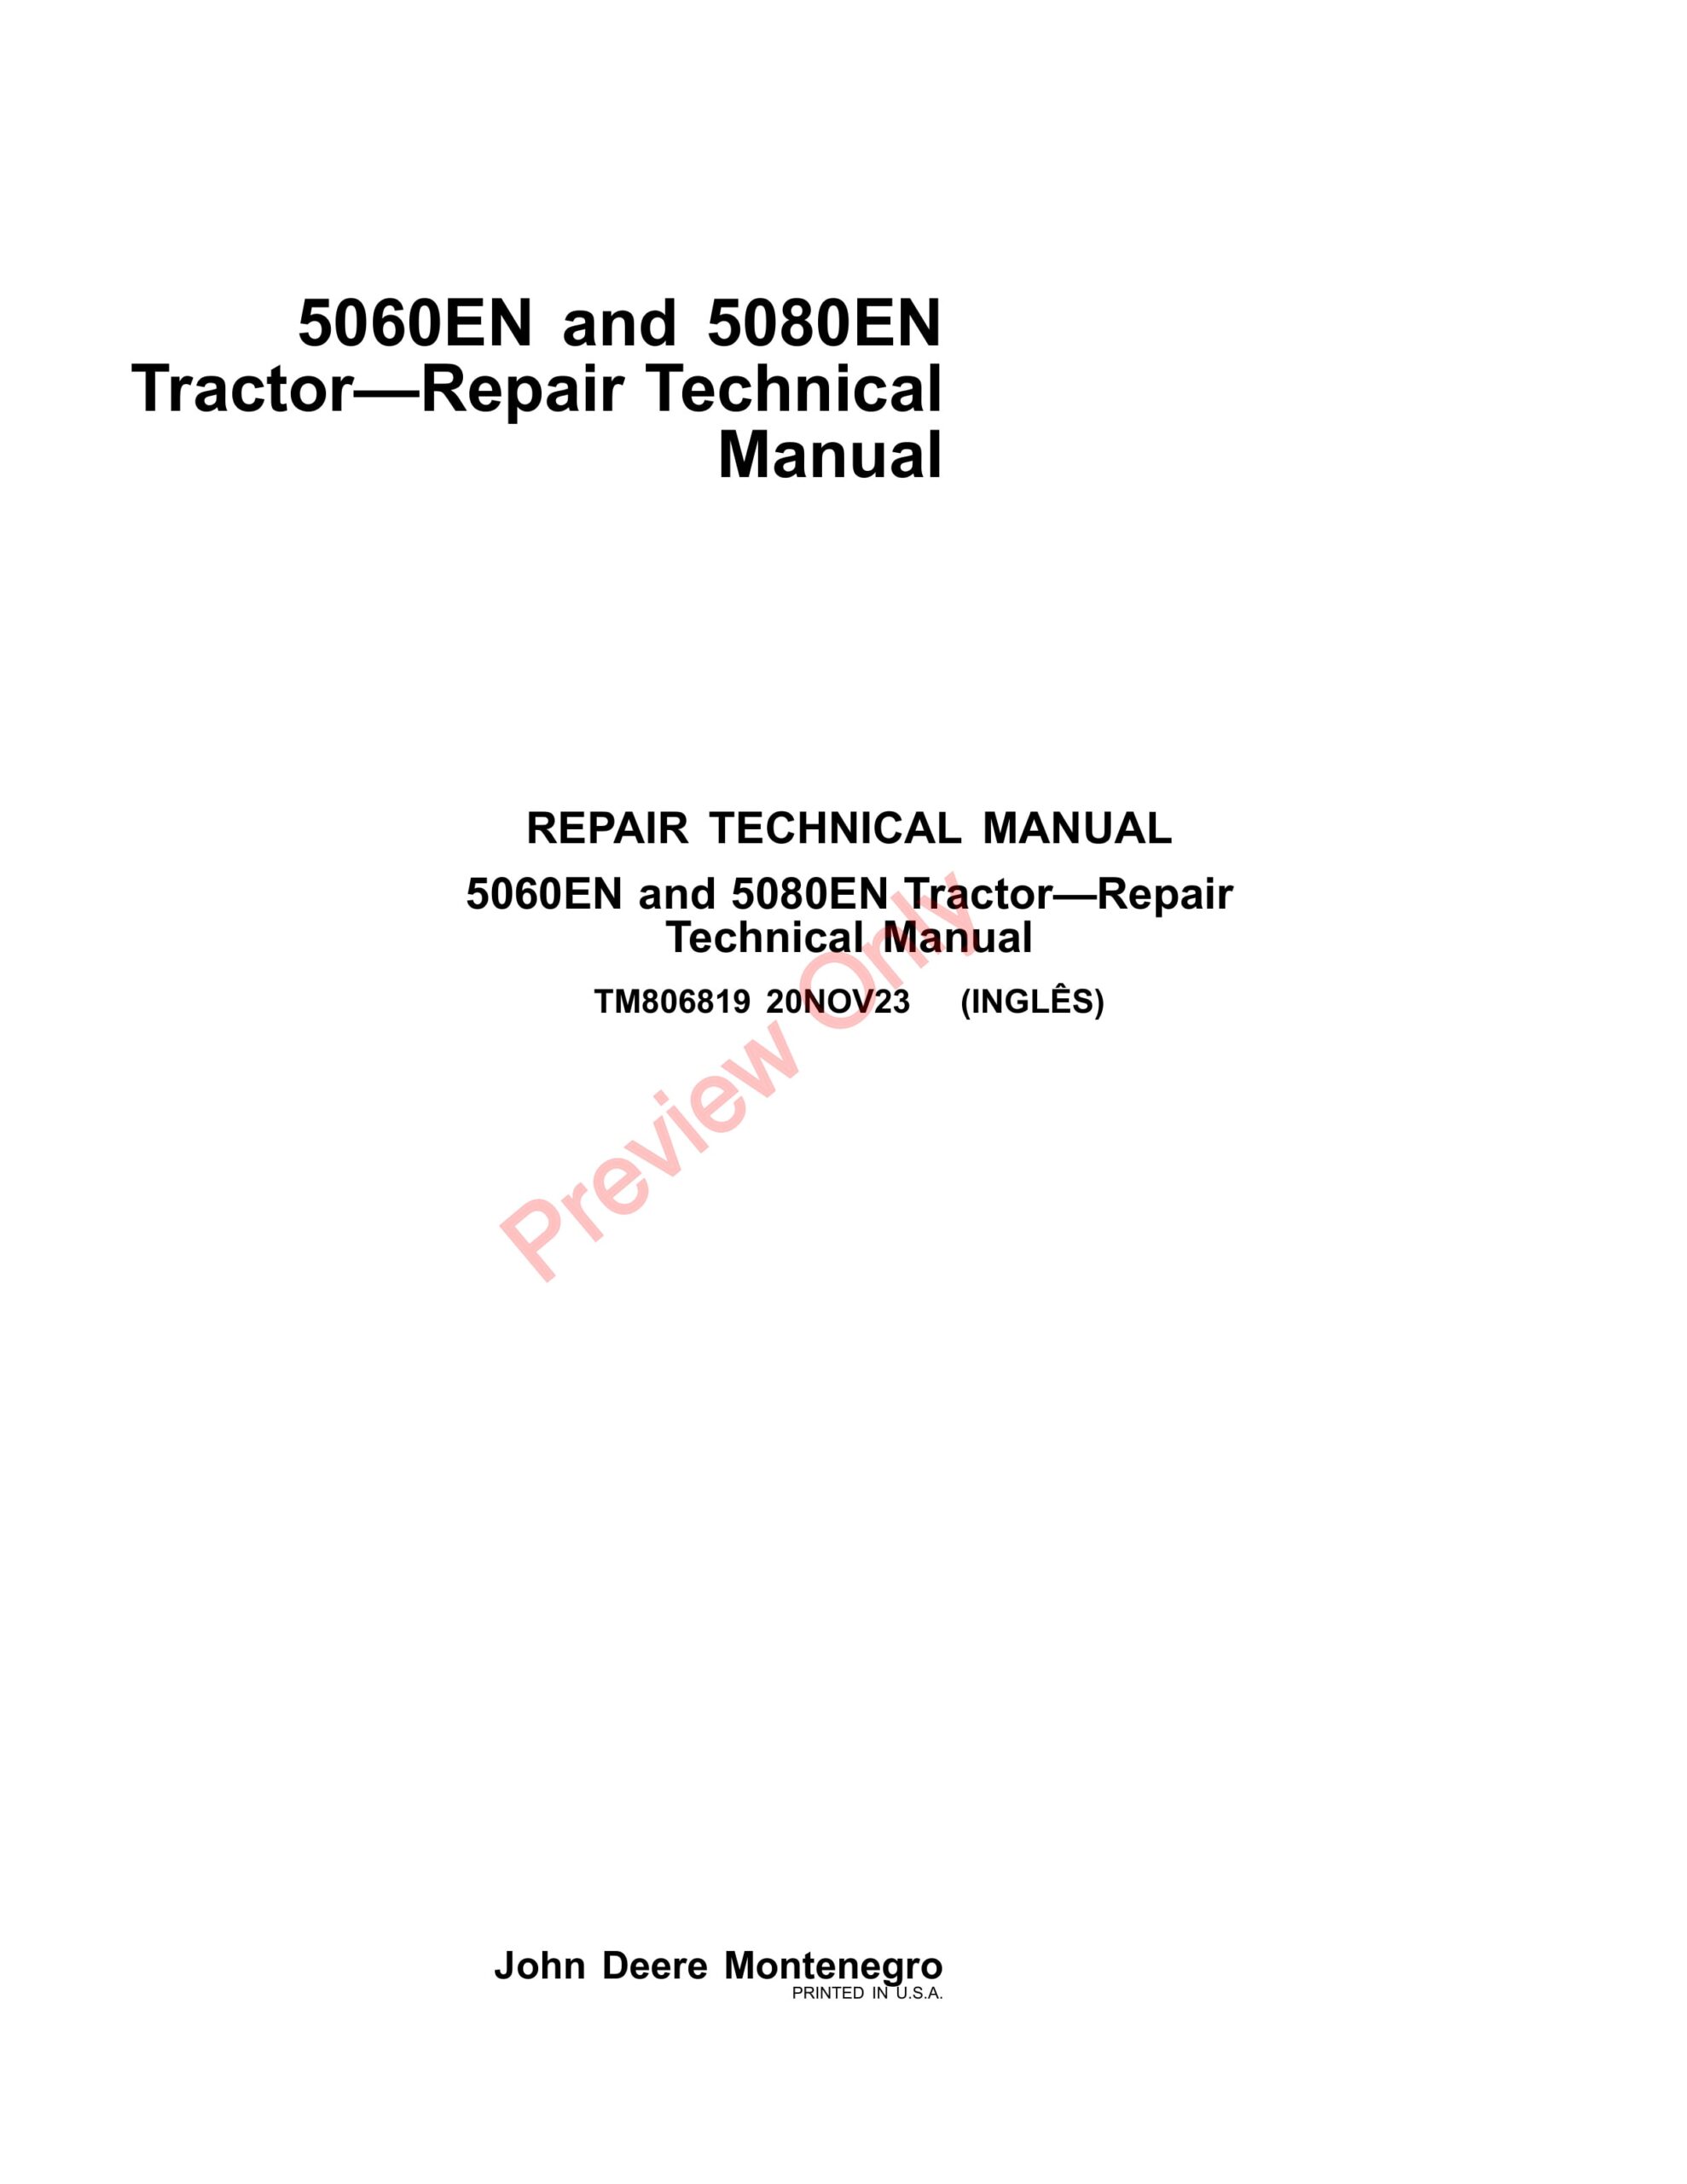 John Deere 5060EN and 5080EN Tractor Repair Technical Manual TM806819 14NOV23-1